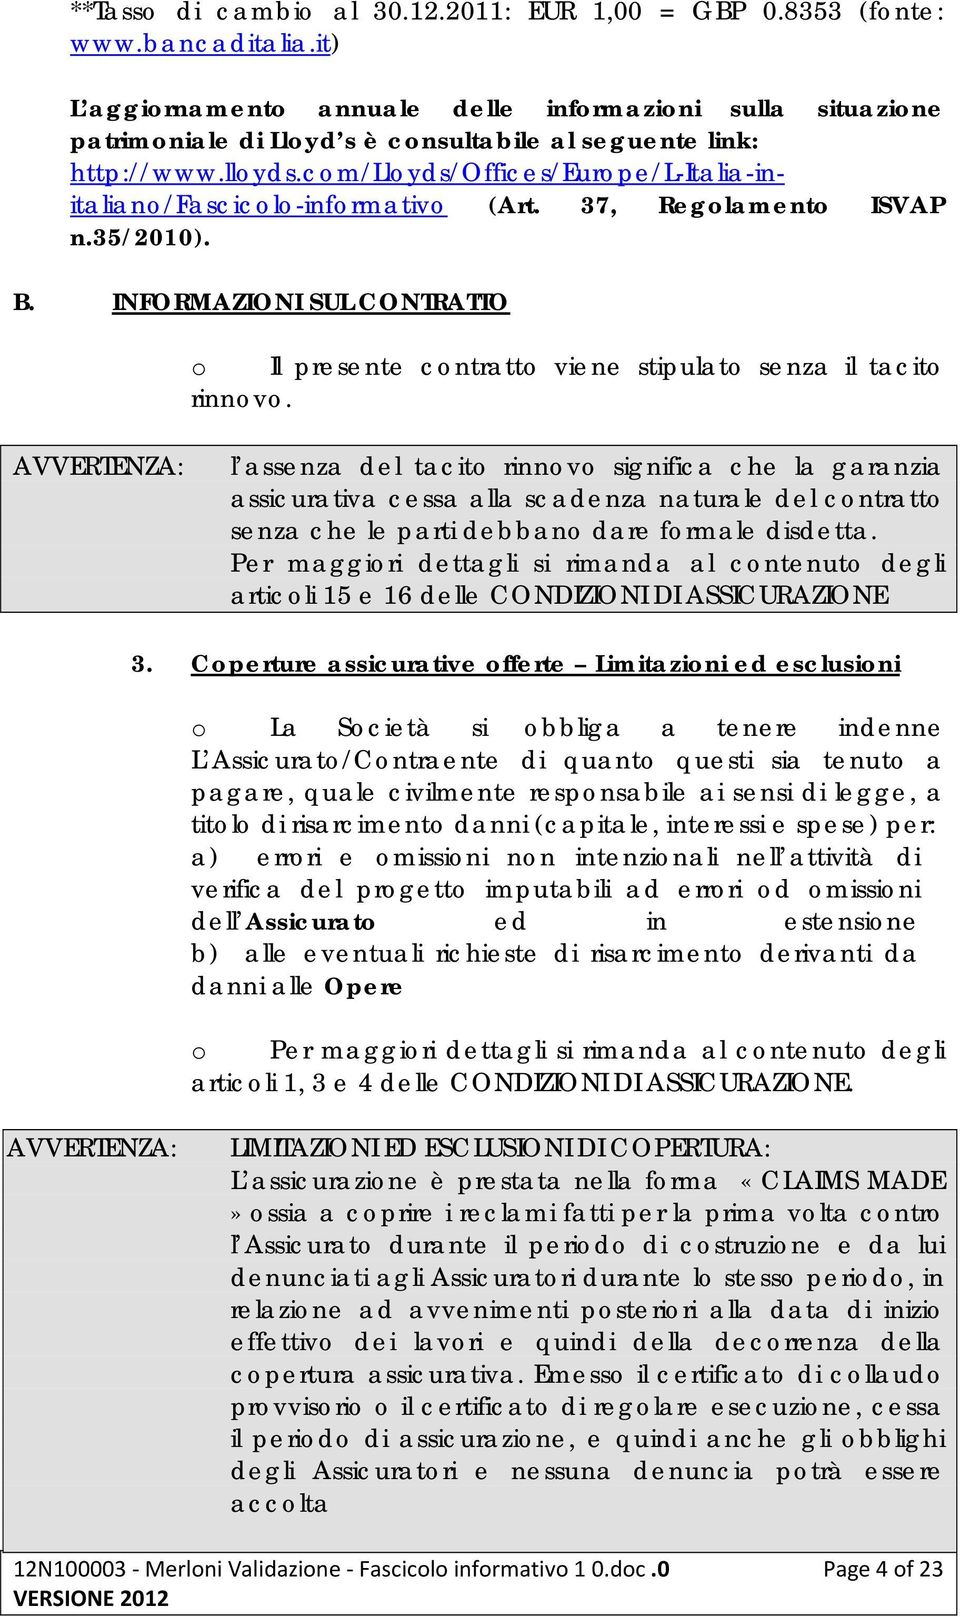 com/lloyds/offices/europe/l-italia-initaliano/fascicolo-informativo (Art. 37, Regolamento ISVAP n.35/2010). B.